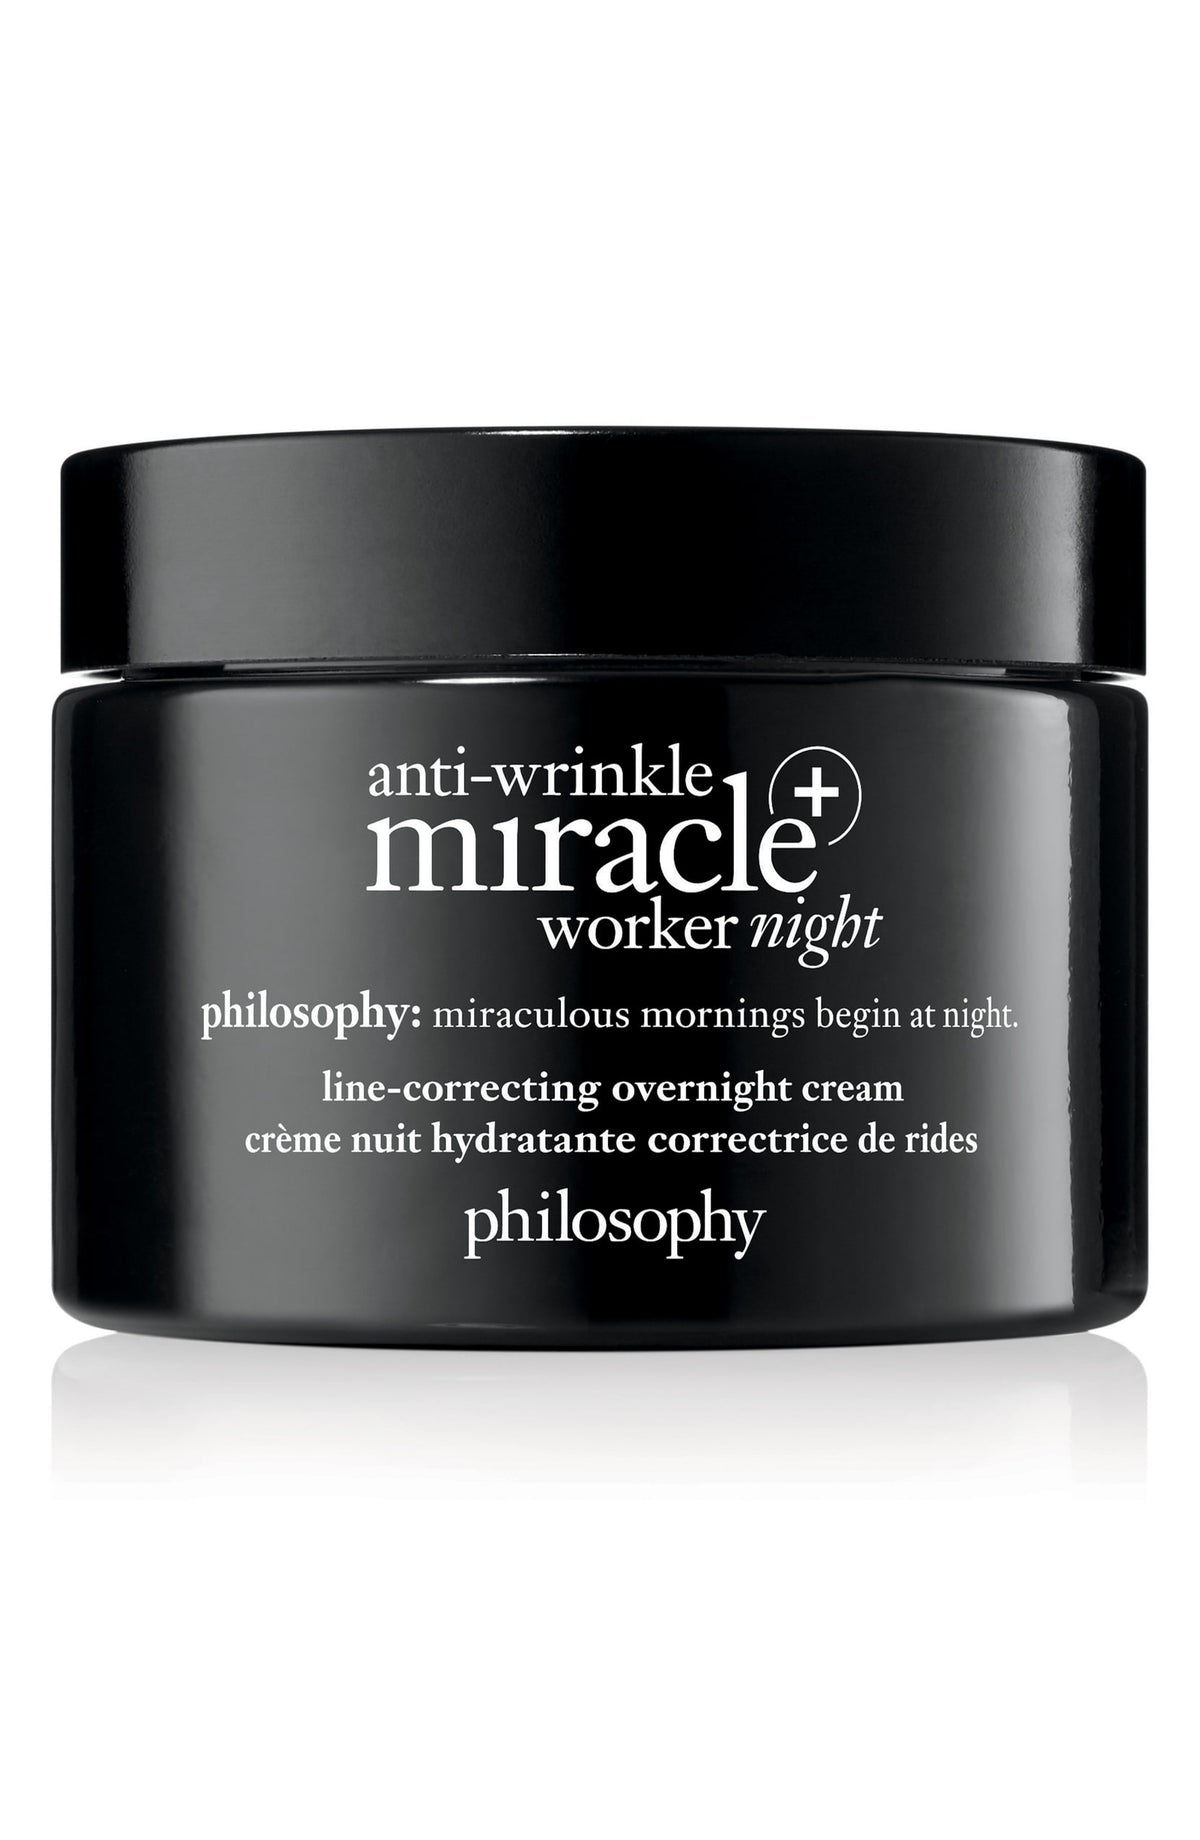 philosophy anti-wrinkle miracle worker night+ line-correcting overnight cream